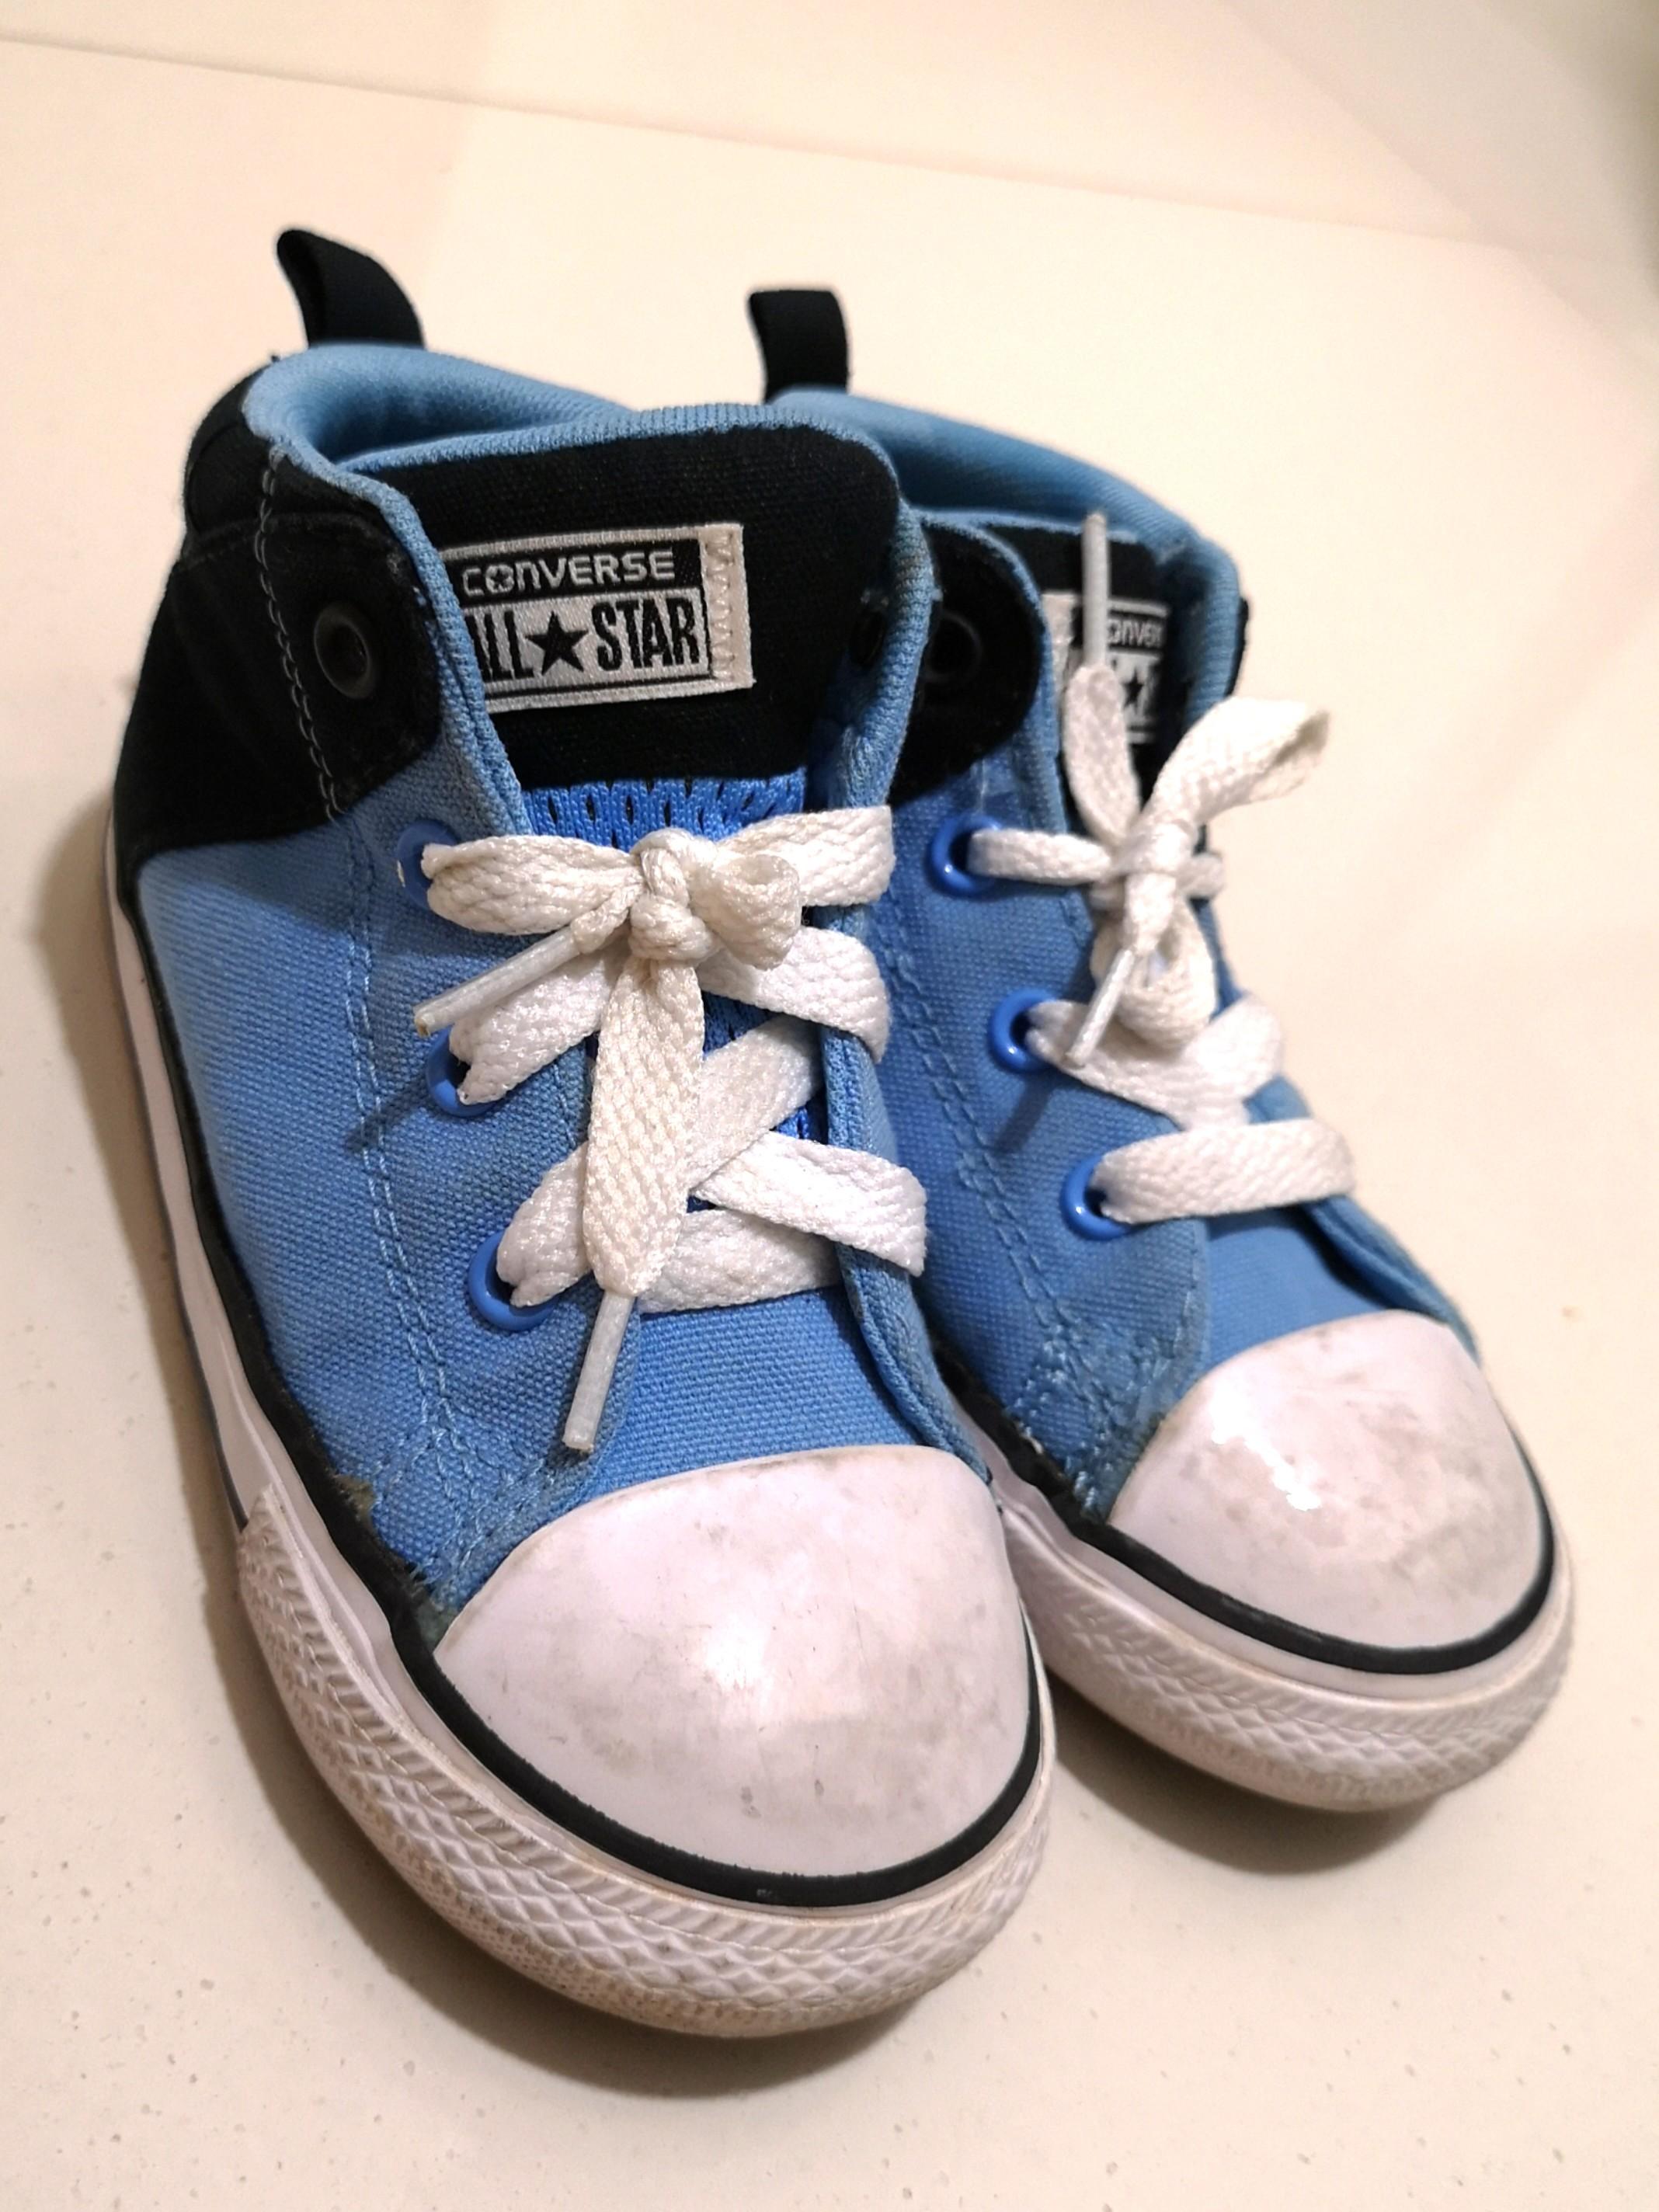 Black/Blue Converse All Star Kids Shoes 